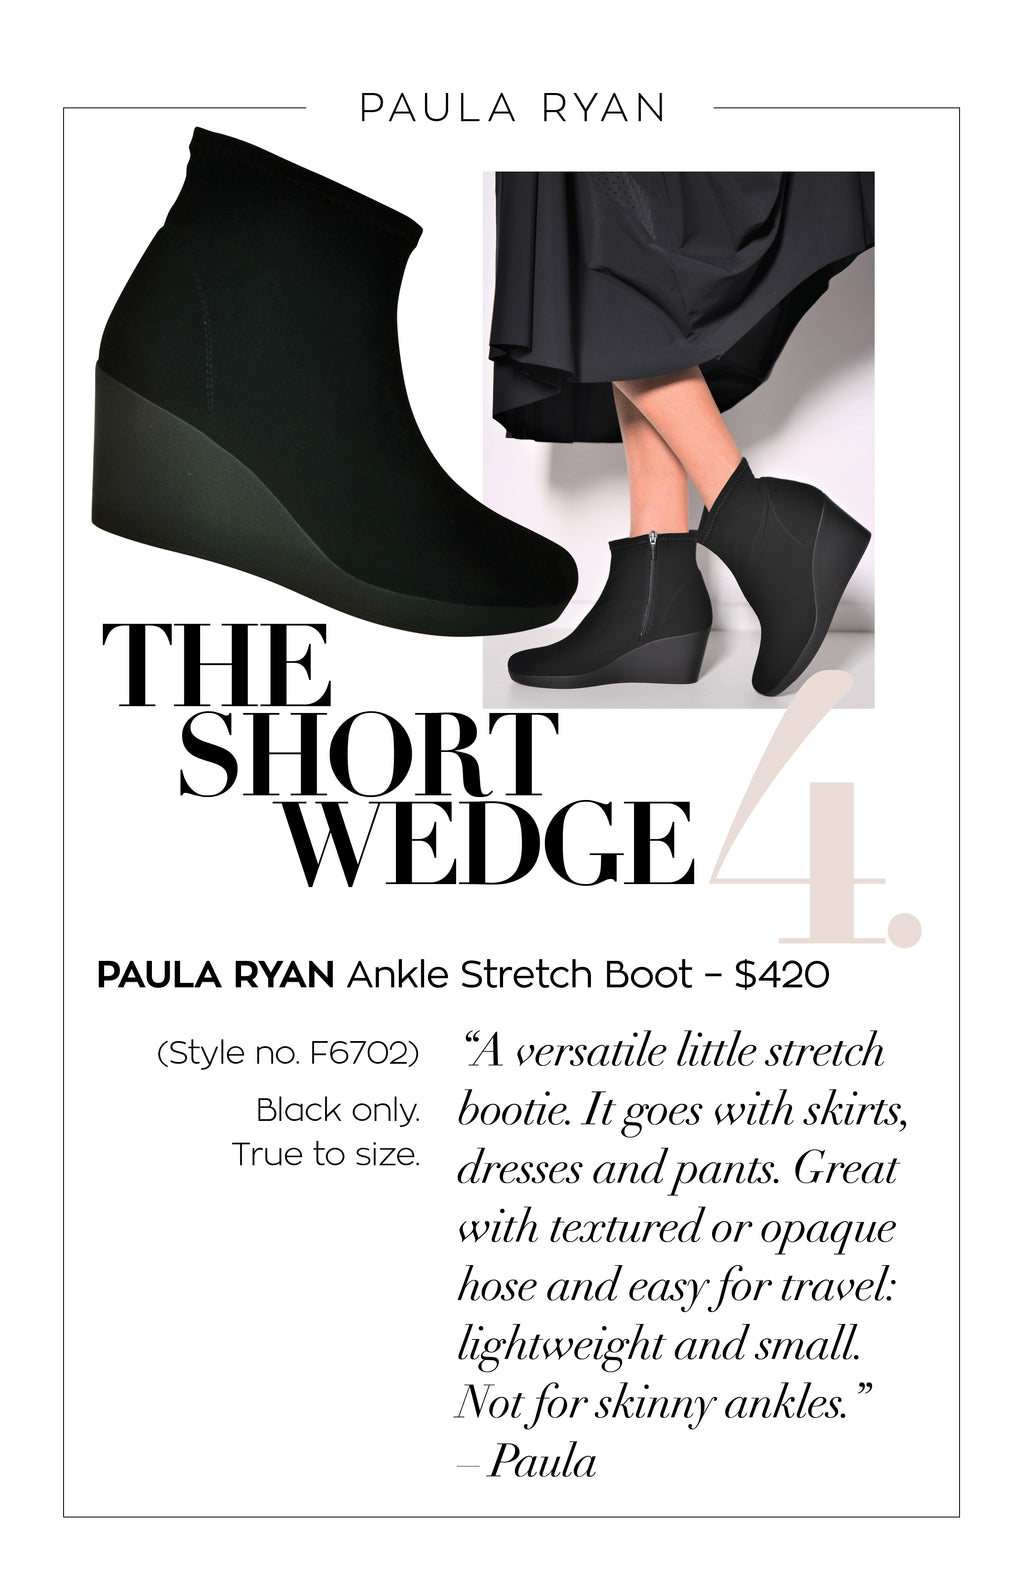 PAULA RYAN Short Wedge Boot - Paula Ryan